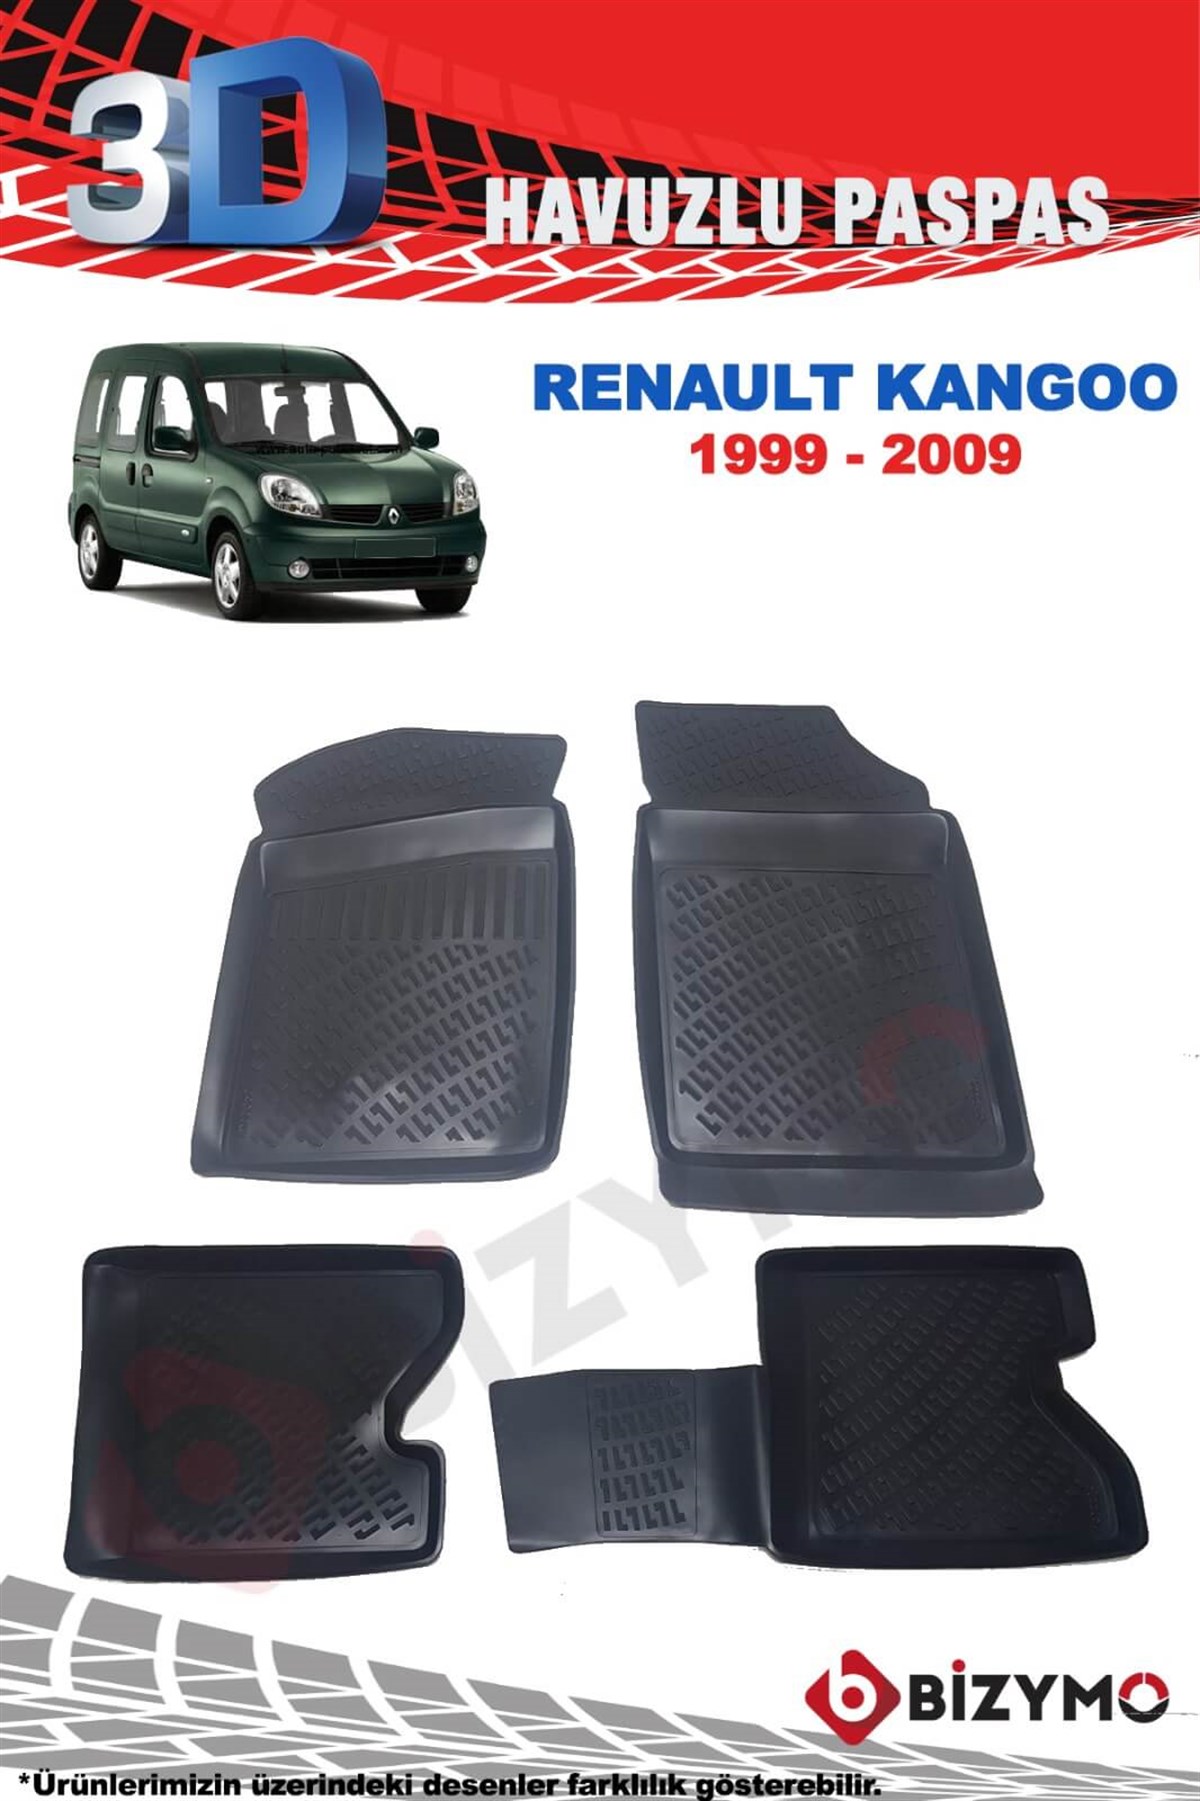 Renault Kangoo 1999-2009 3D Paspas Takımı Bizymo - Bizim Oto